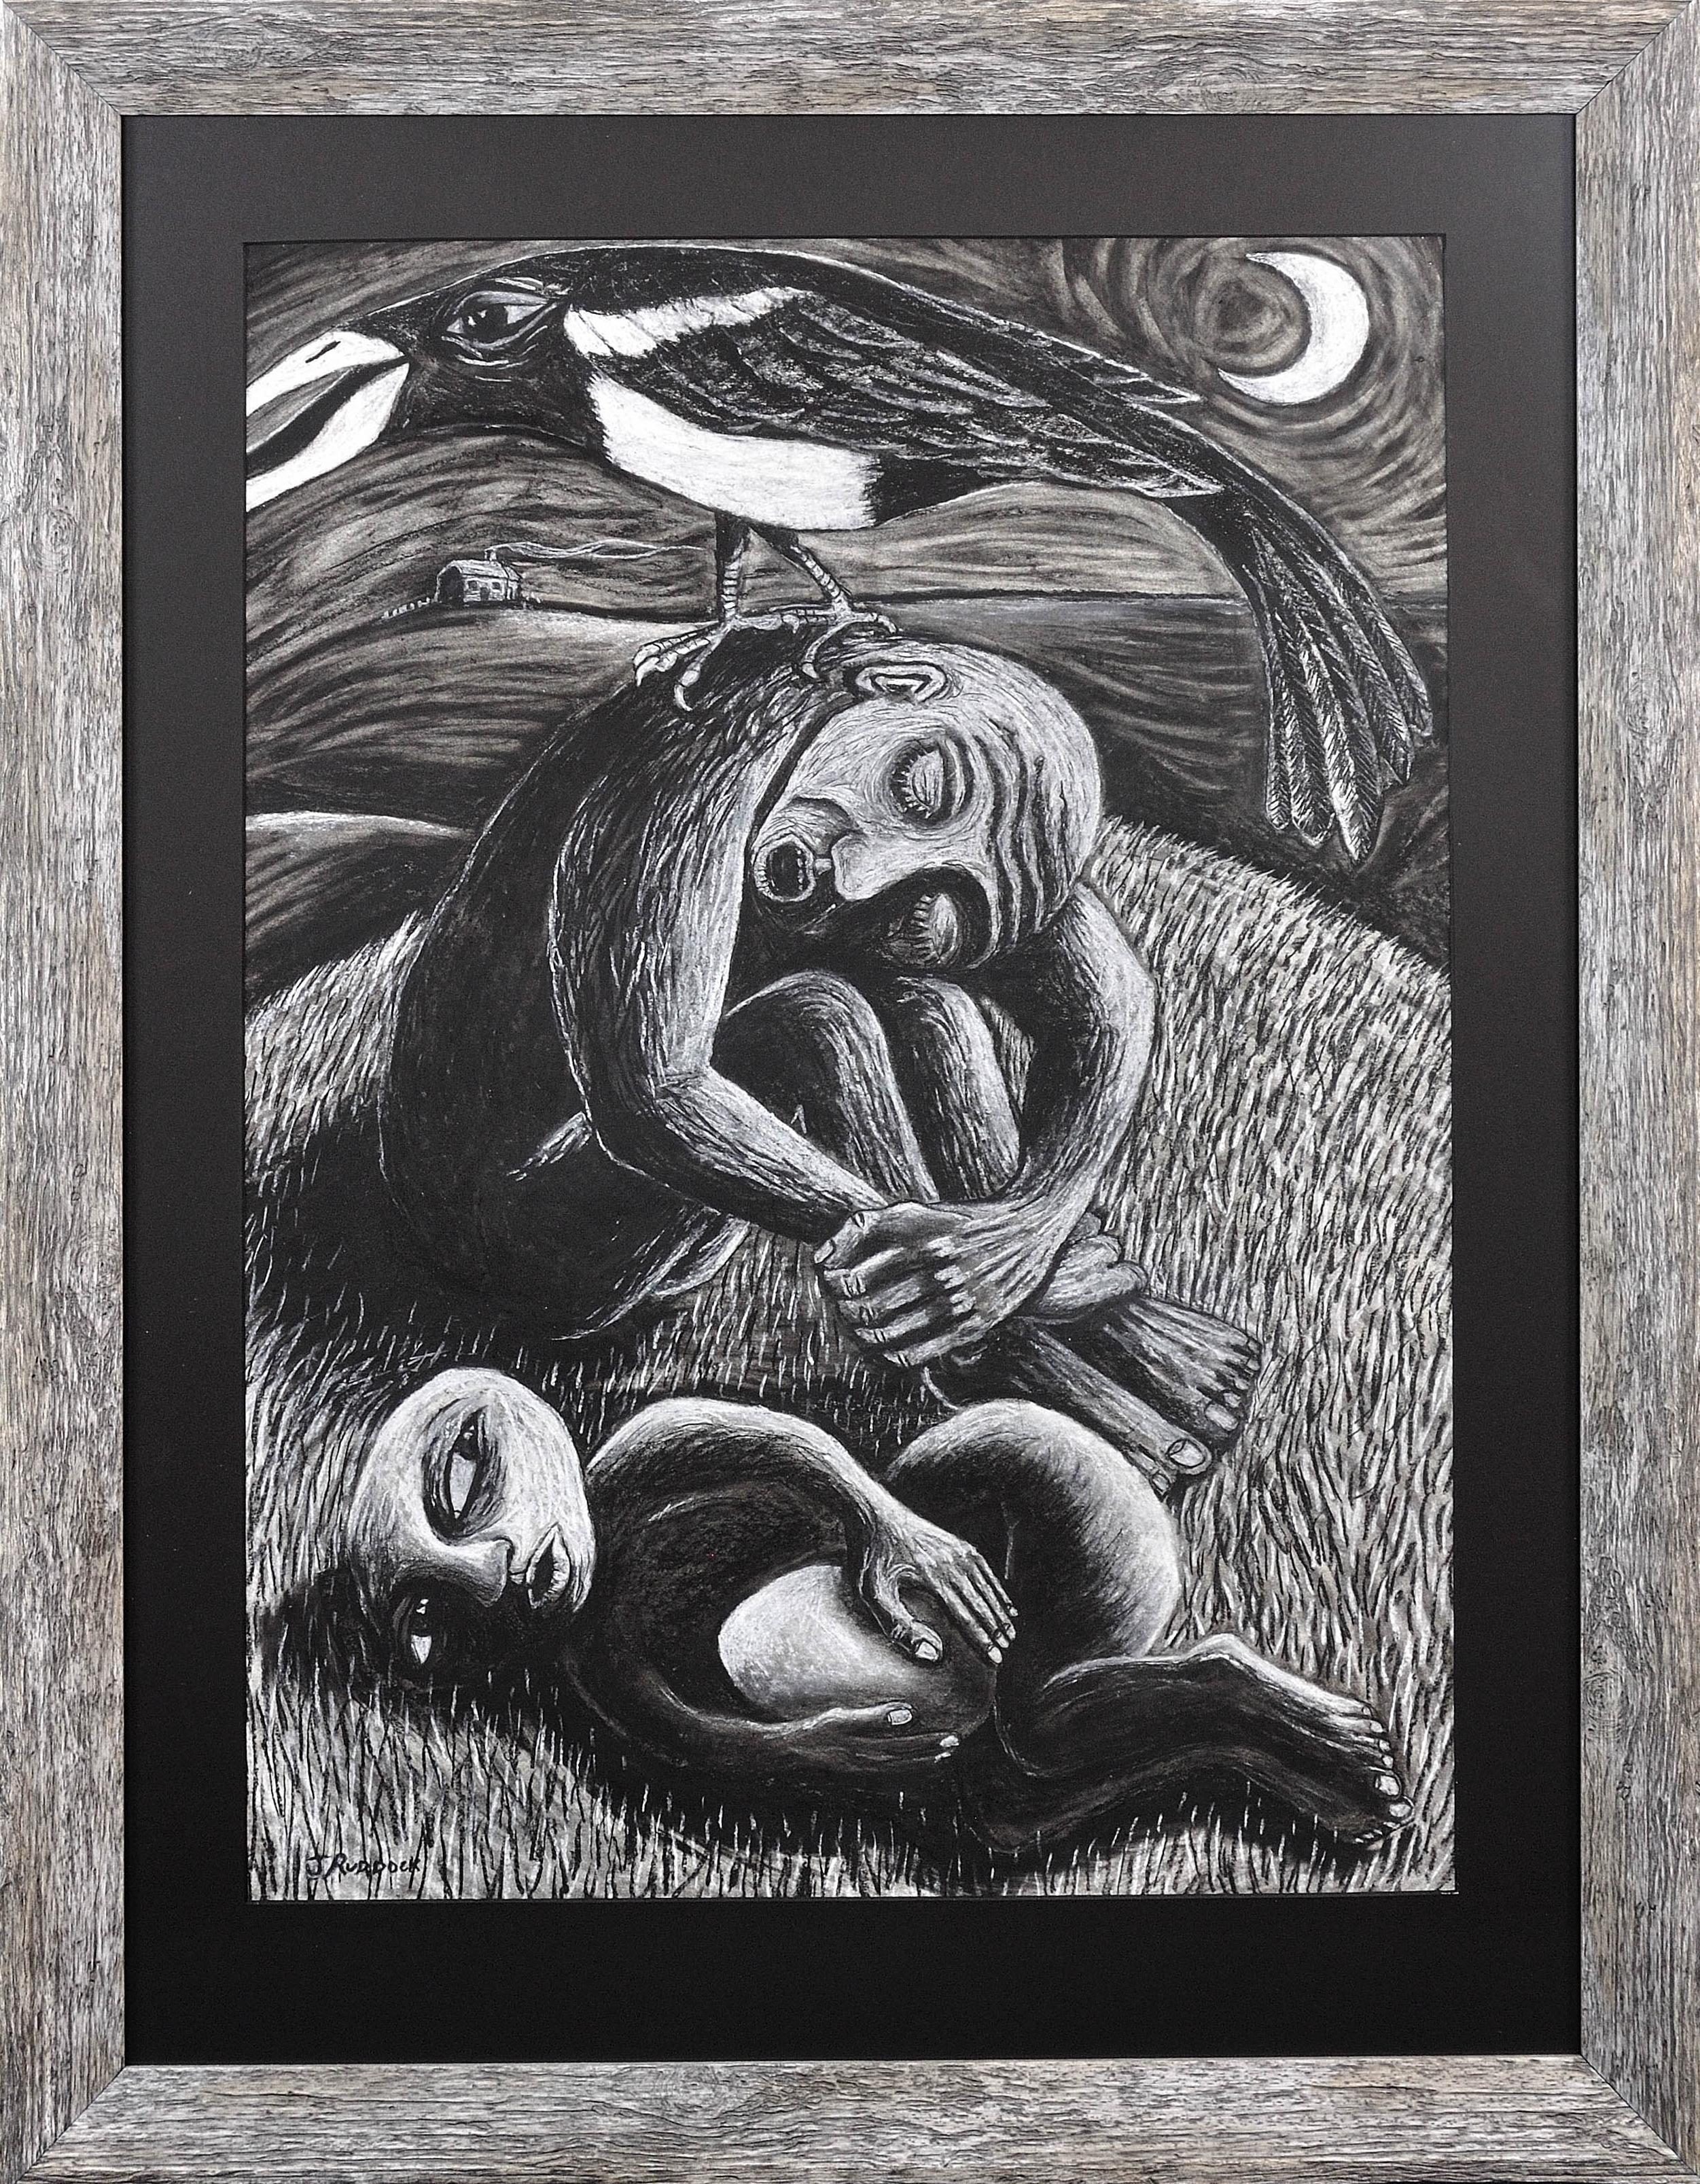 Julian Ruddock Figurative Art - The Thief. Original Drawing.Welsh Artist. Magpie.Late 20th Century.Black & White